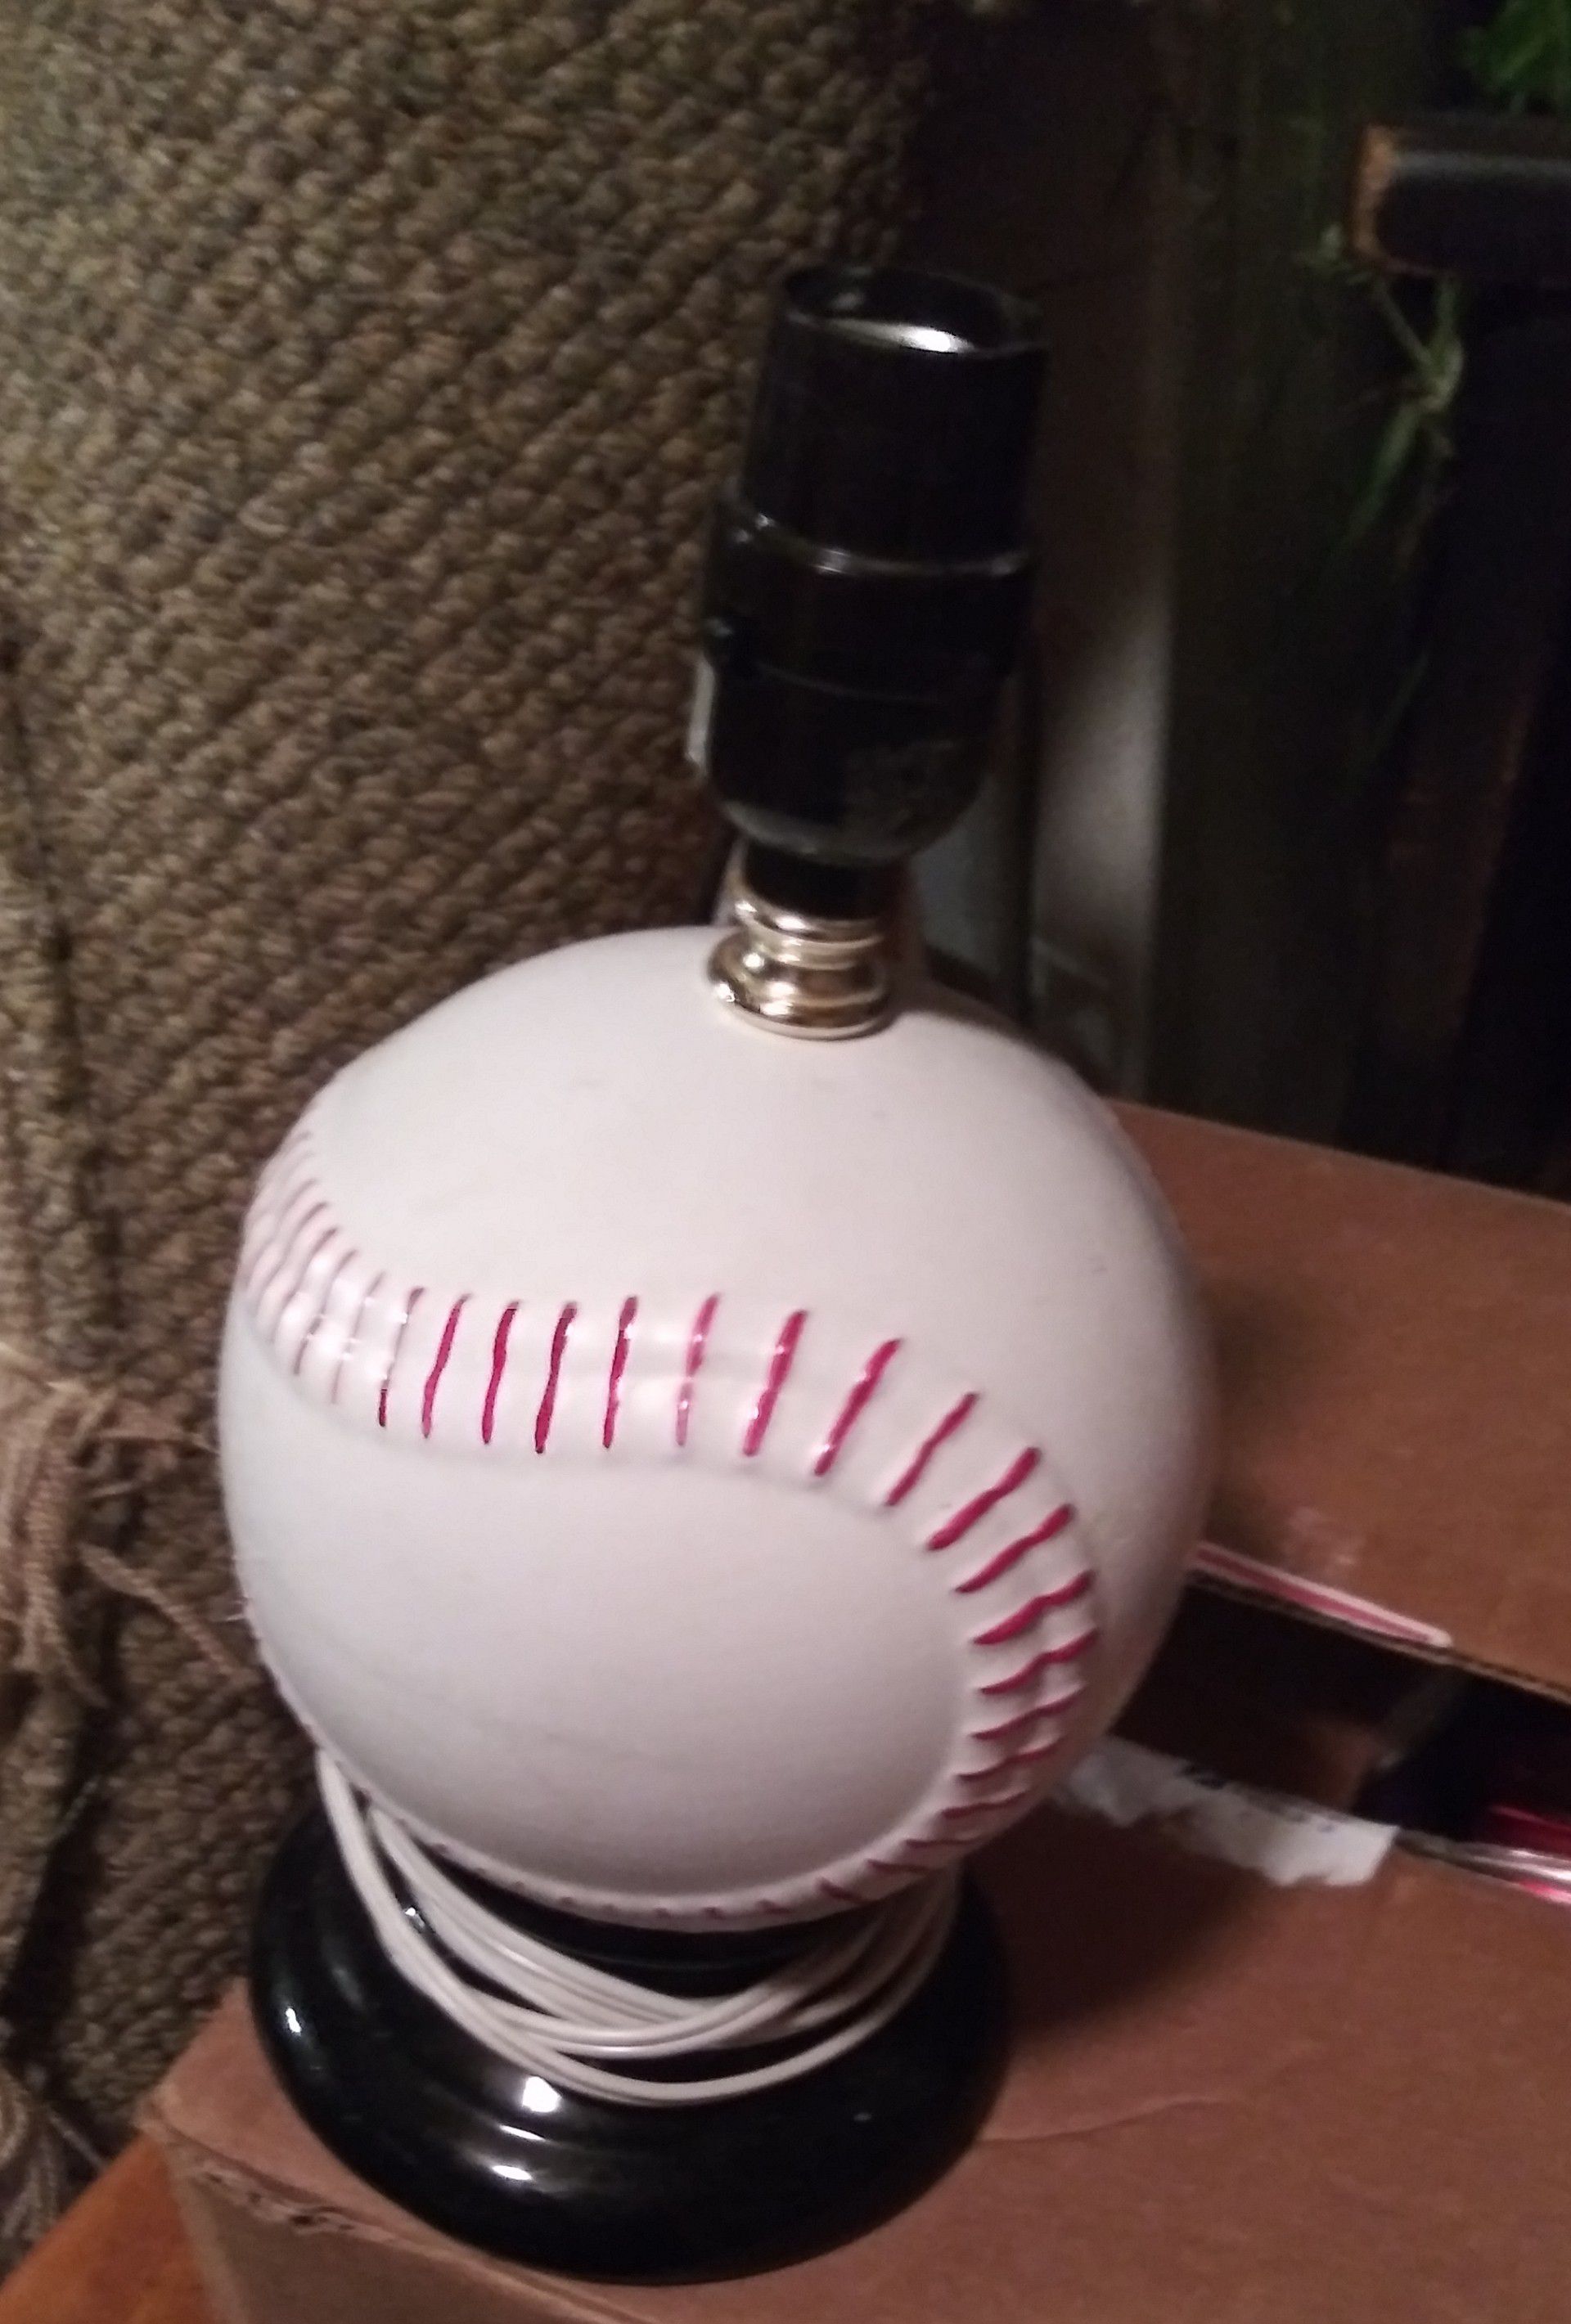 Baseball lamp